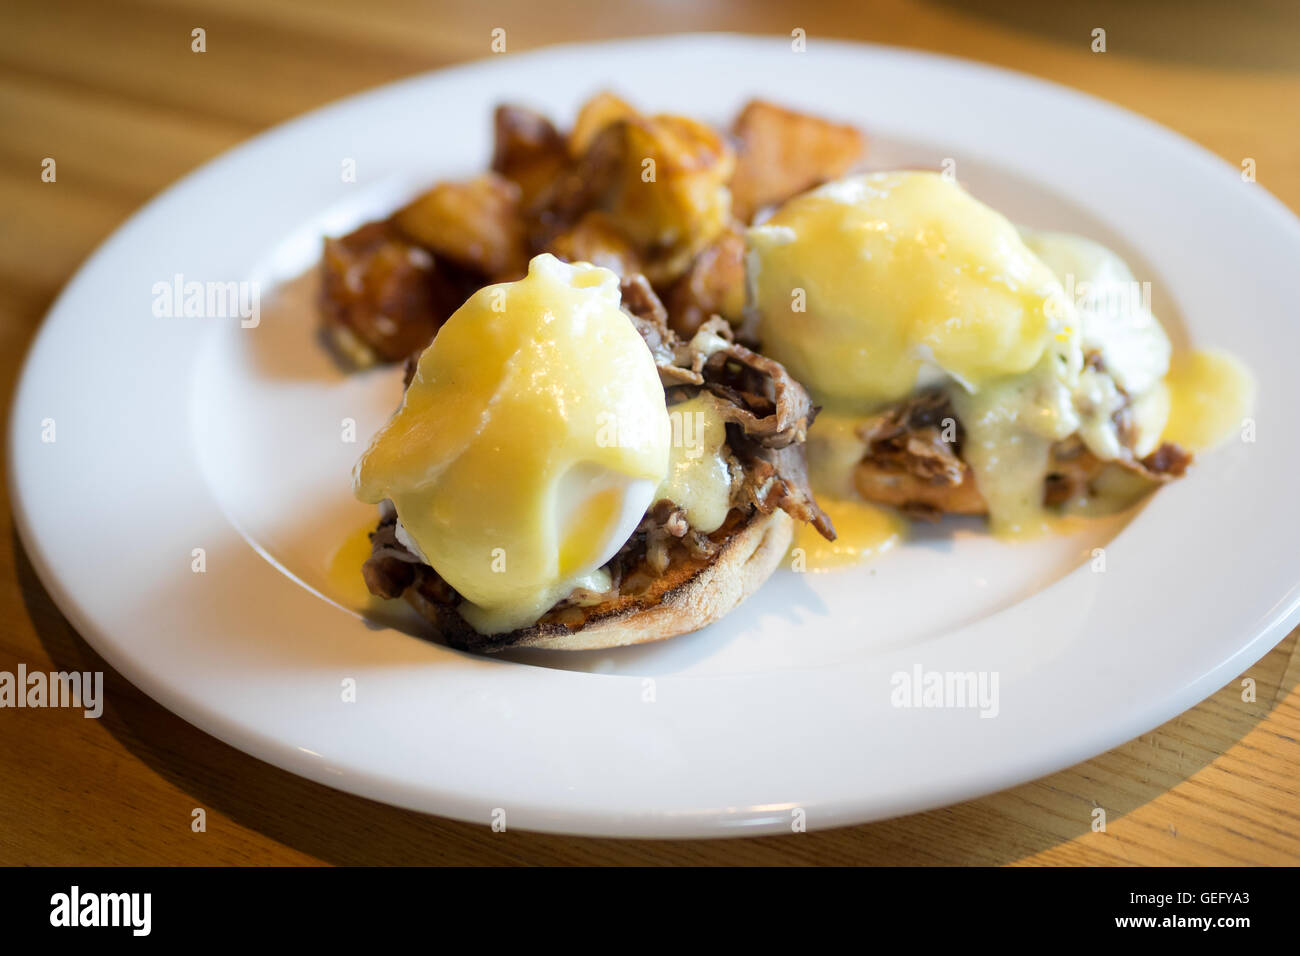 Prime rib eggs benedict with potatoes for breakfast. Stock Photo